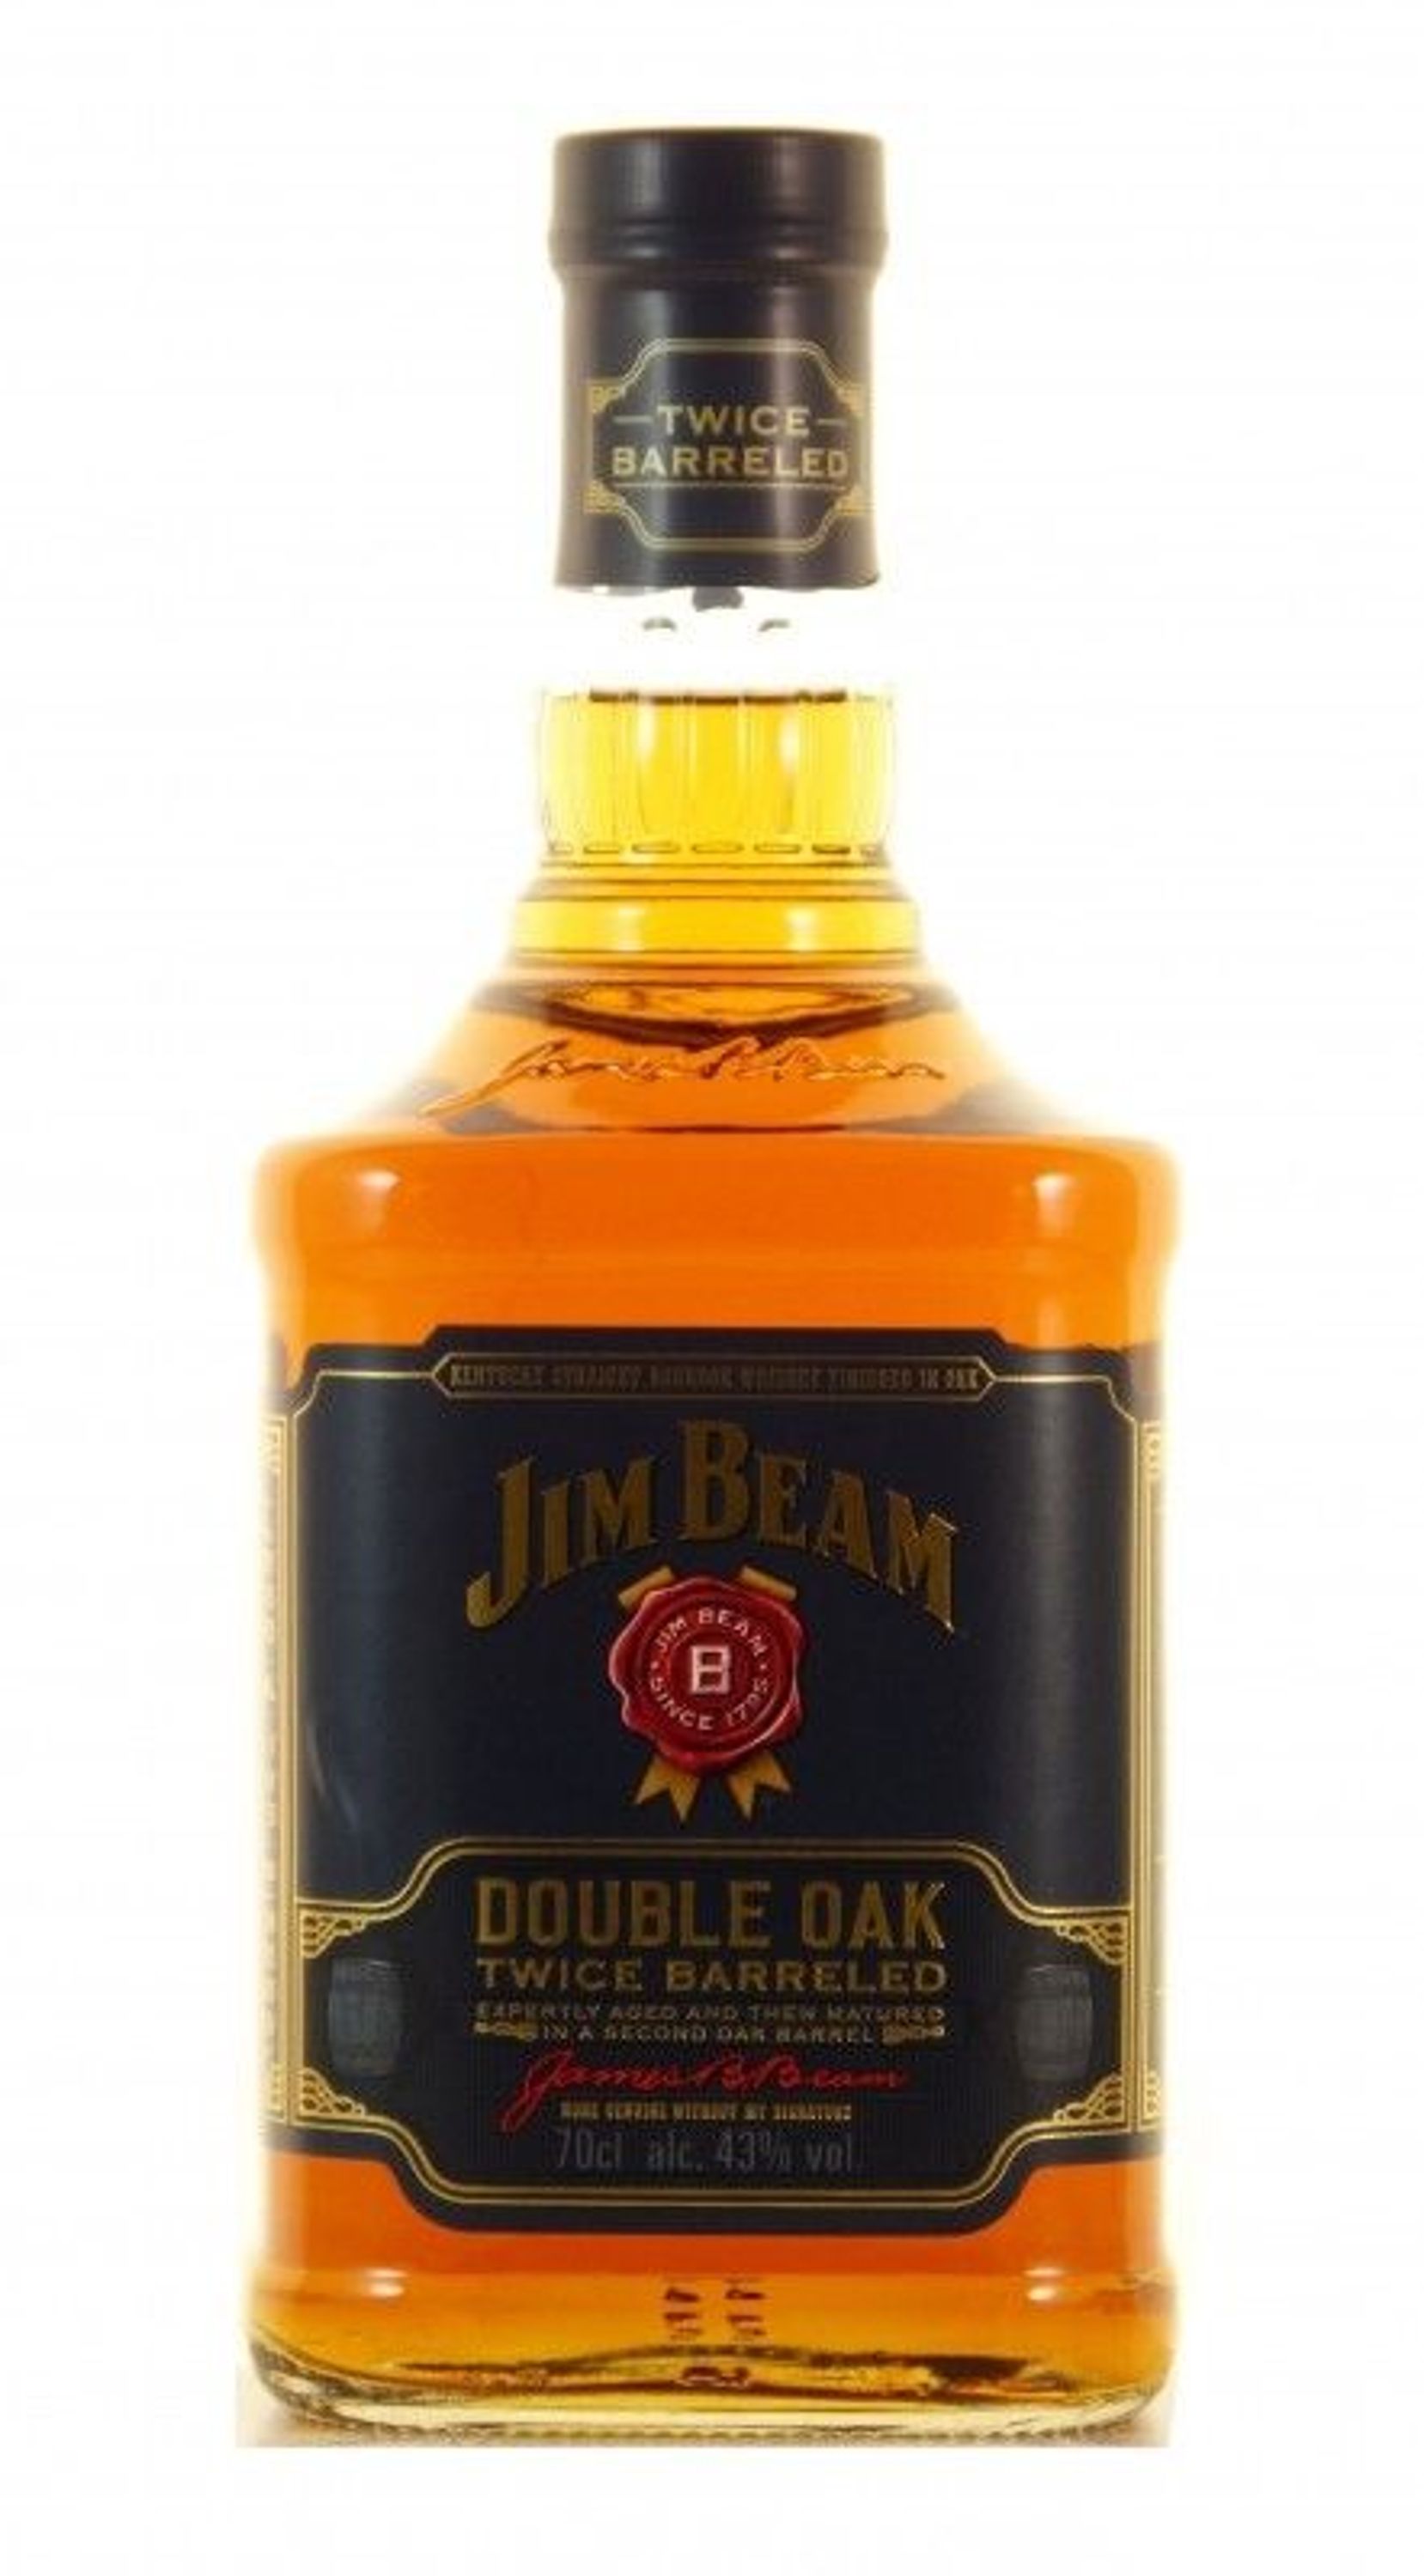 Jim Beam Double Oak Kentucky Straight Bourbon Whiskey 0.7l, alc. 43% by volume